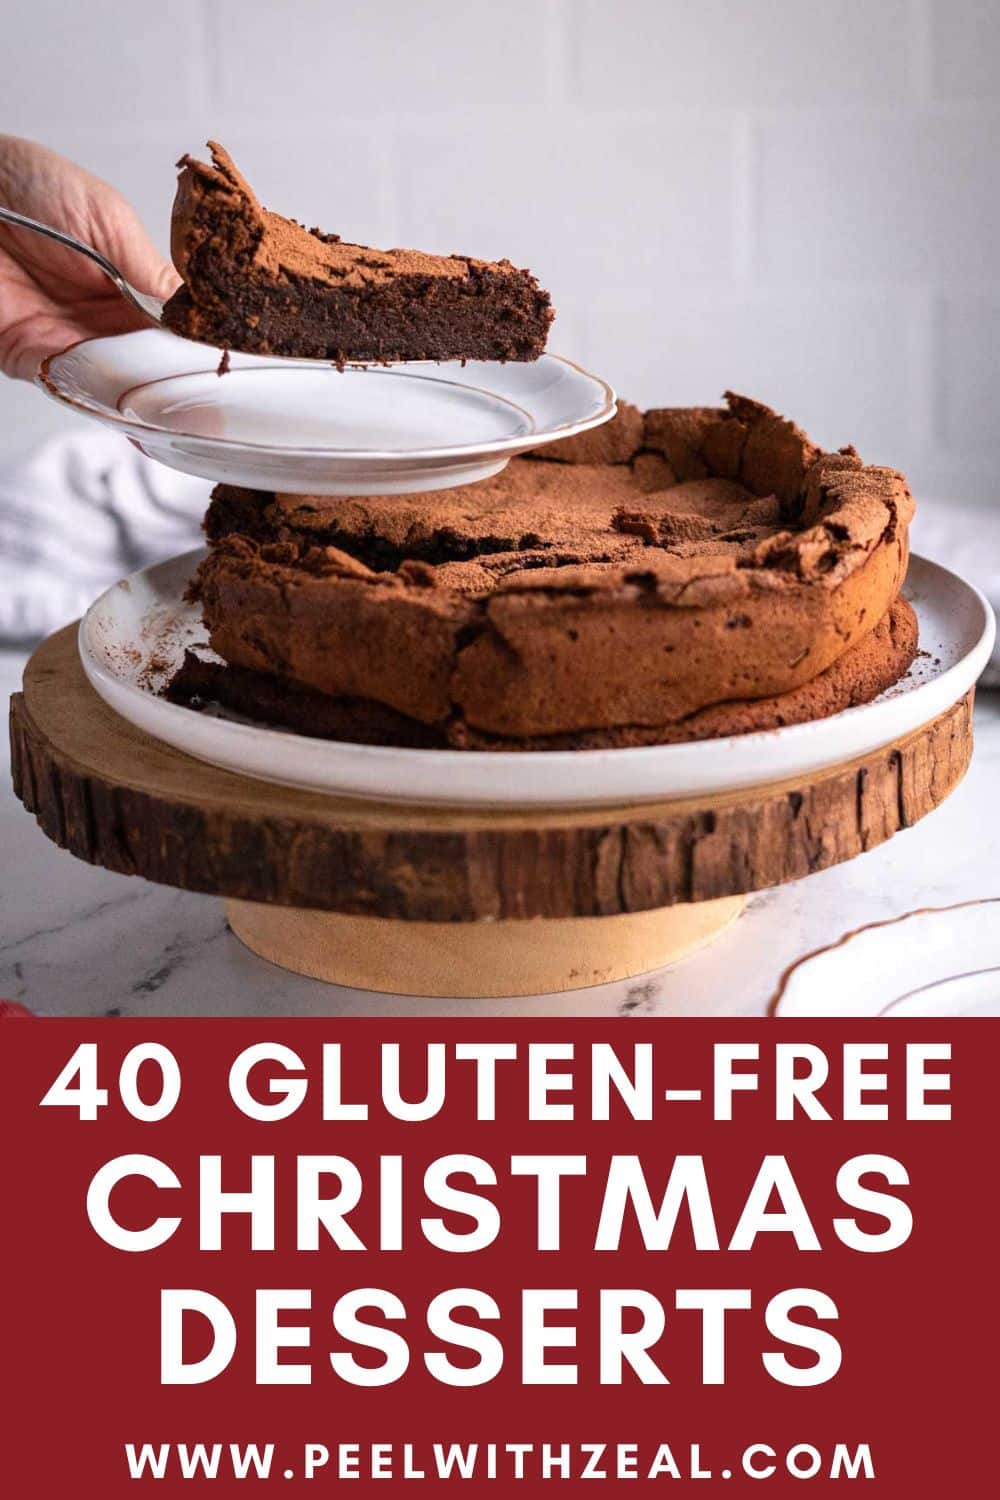 Gluten Free chocolate souffle. 